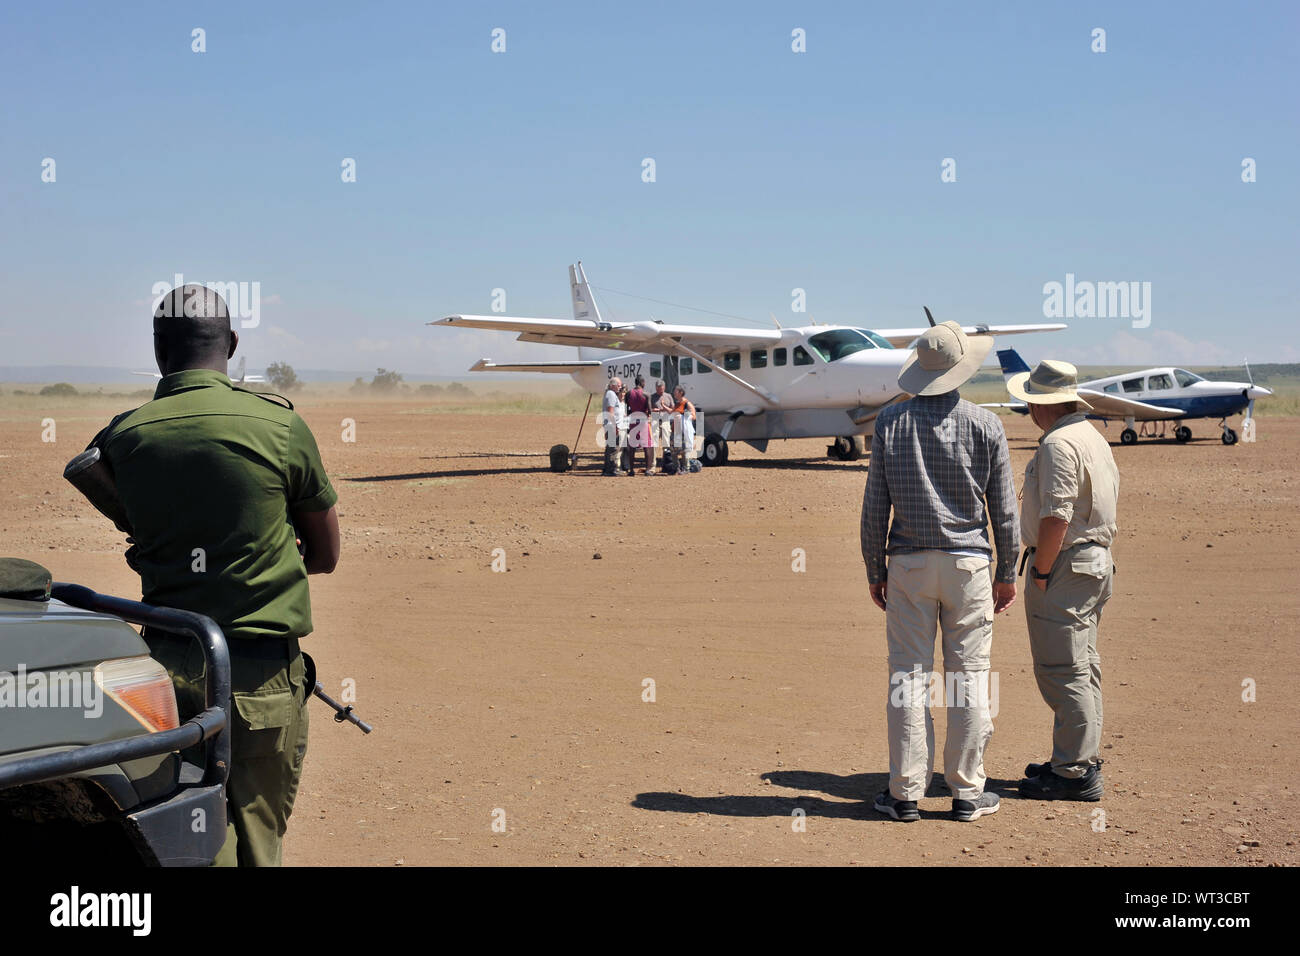 Airplane and tourists at Olkiombo Airstrip, Masai Mara, Kenya Stock Photo